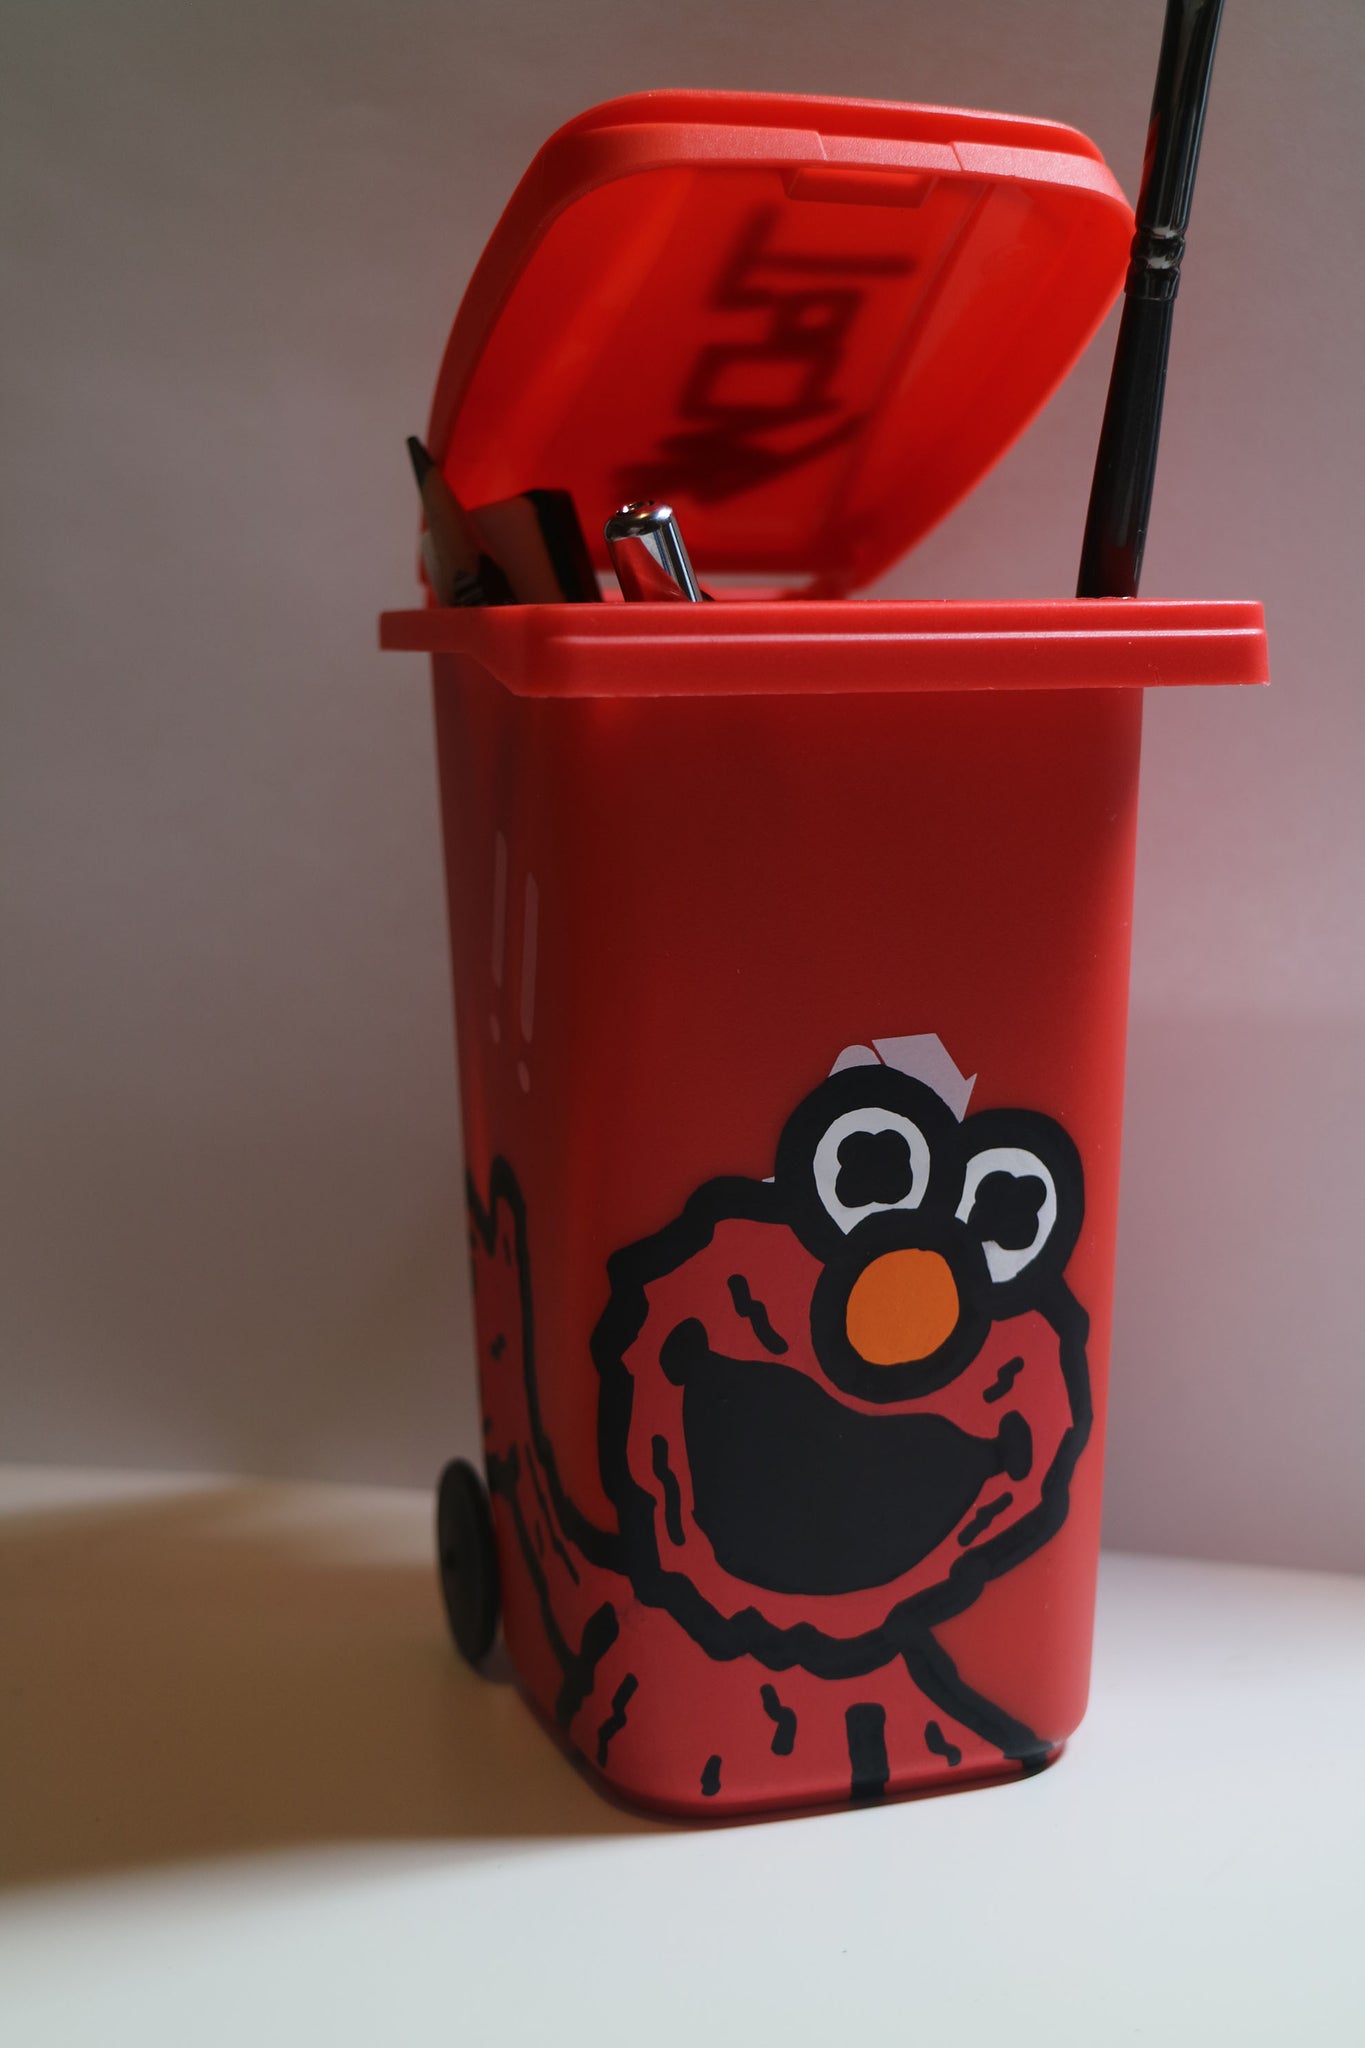 Elmo 5 inch Recycling Bin